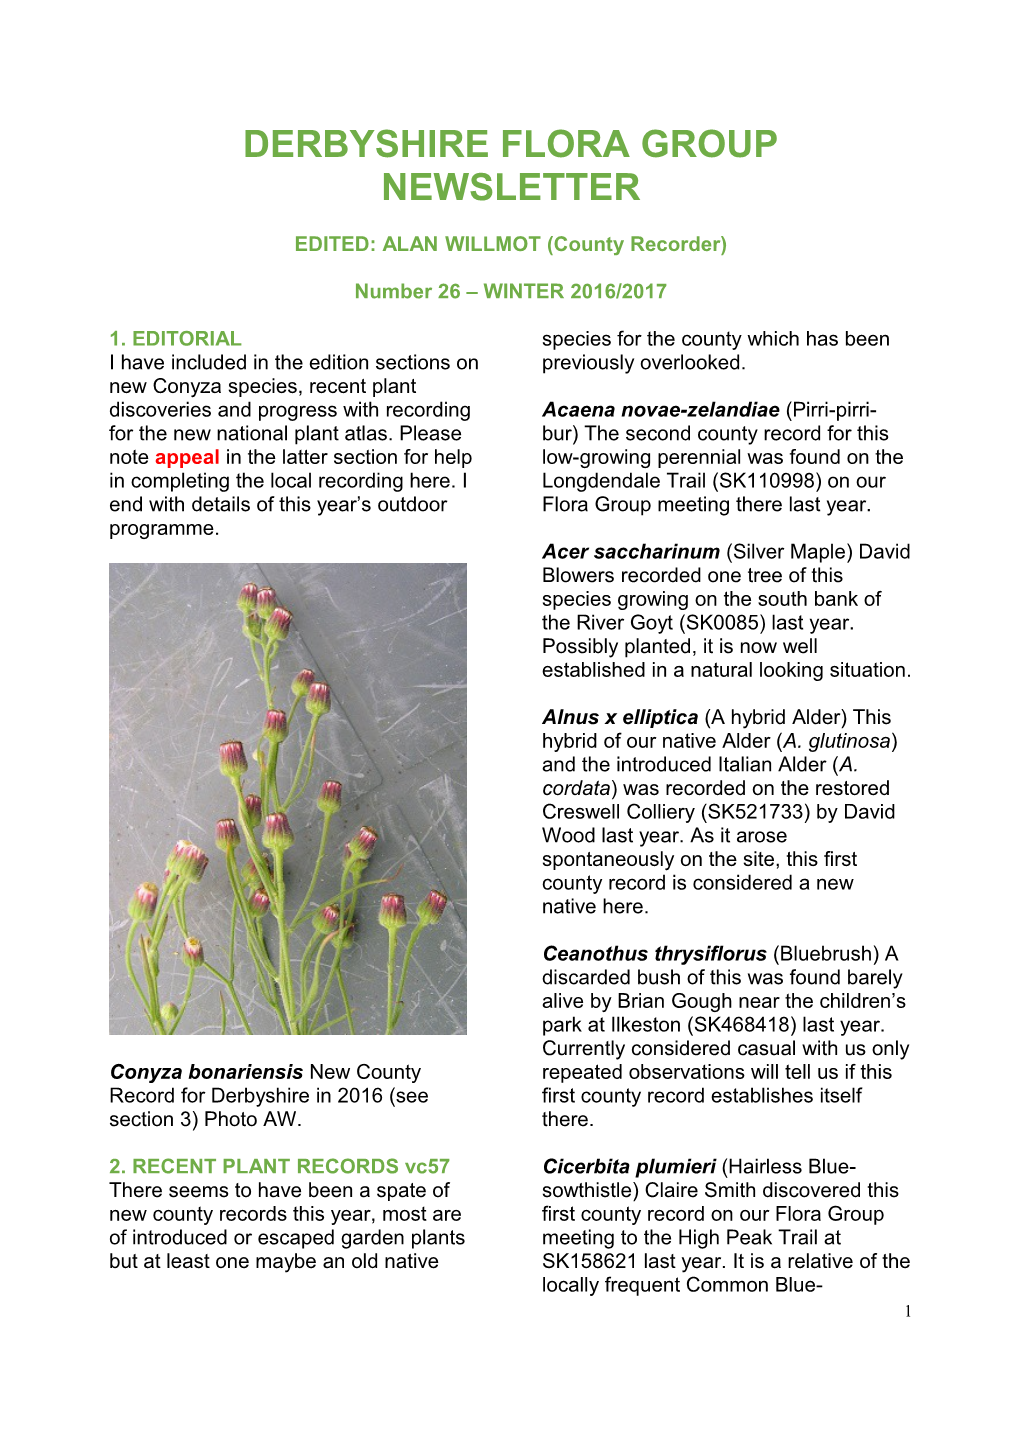 Derbyshire Flora Group Newsletter